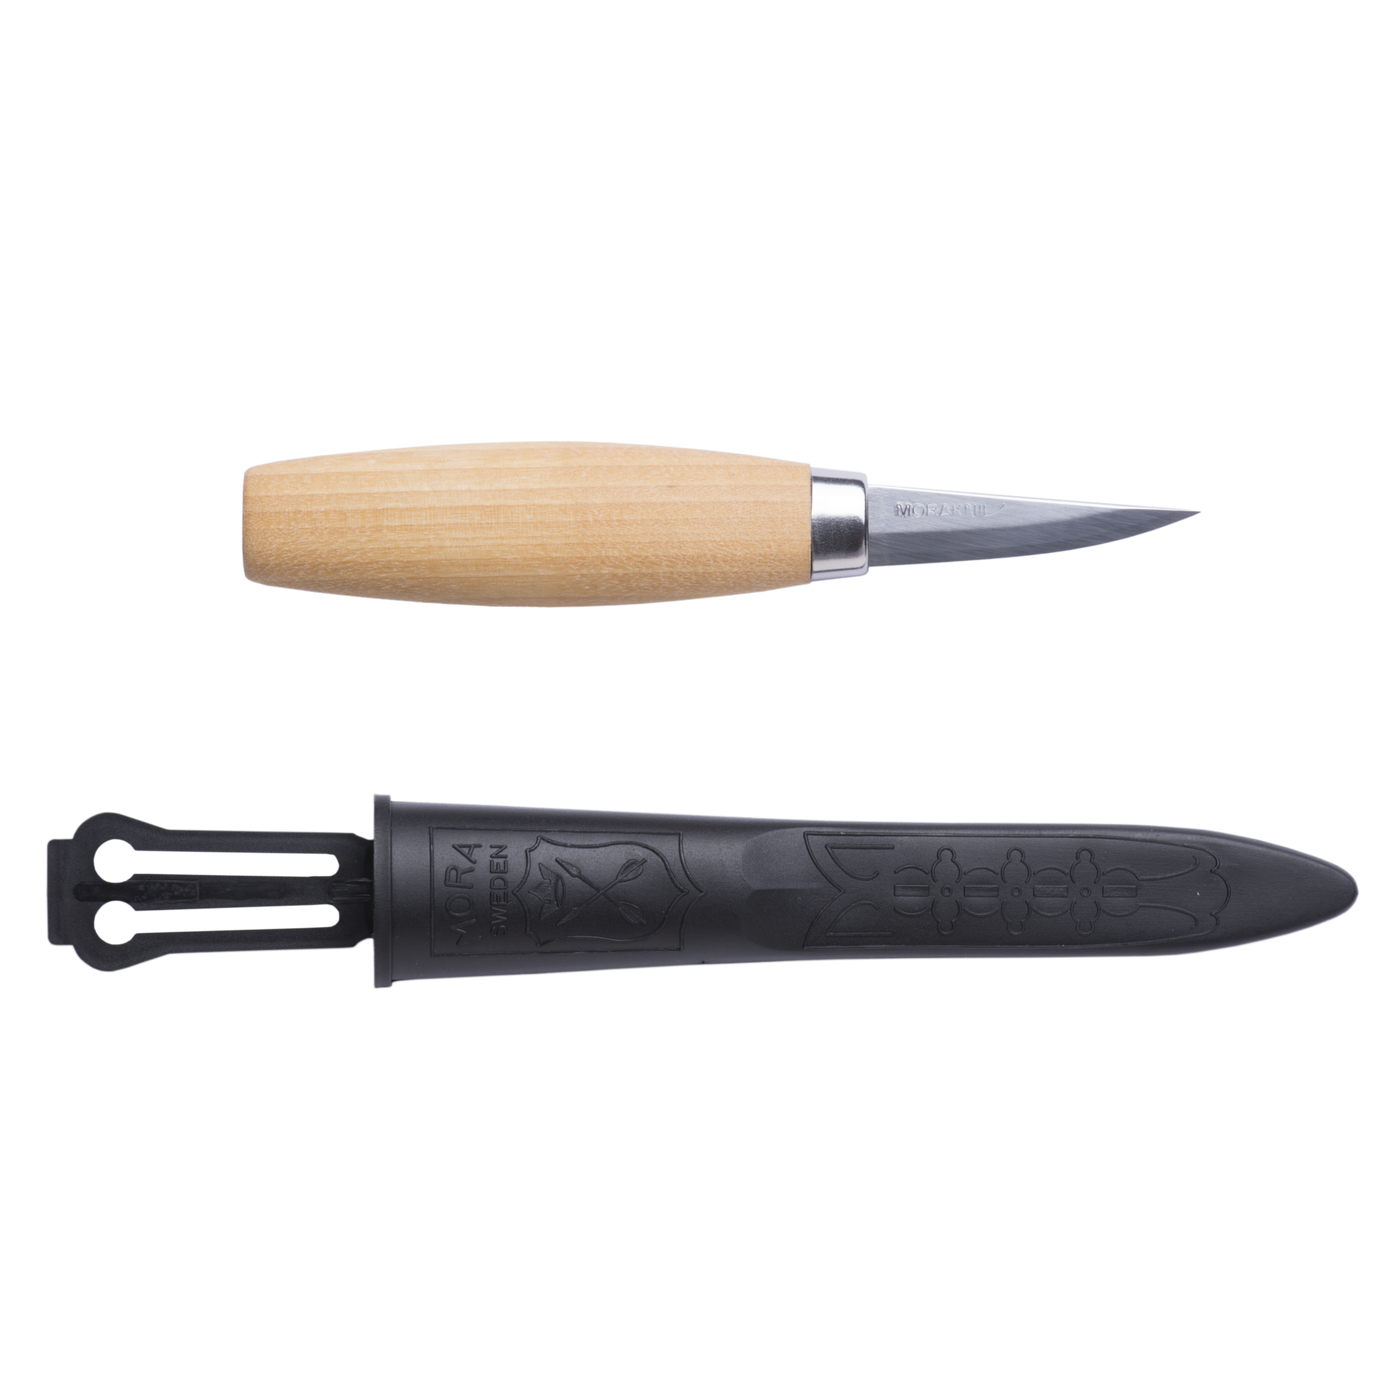 Morakniv 120 Wood Carving Knife - 60mm